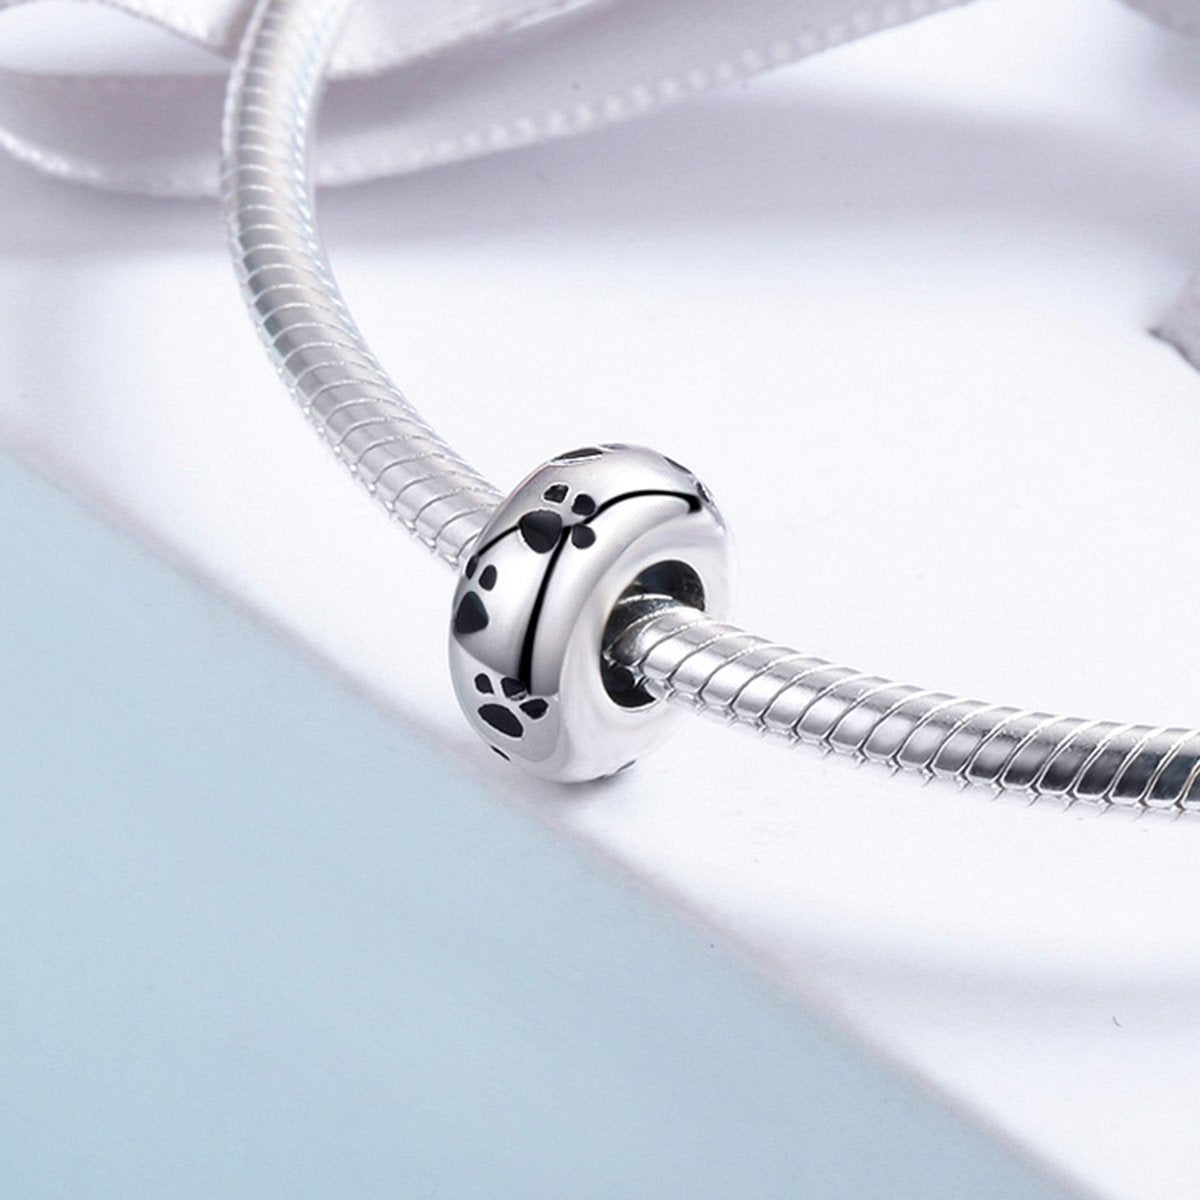 Sterling 925 silver charm the footprint circle bead pendant fits Pandora charm and European charm bracelet Xaxe.com